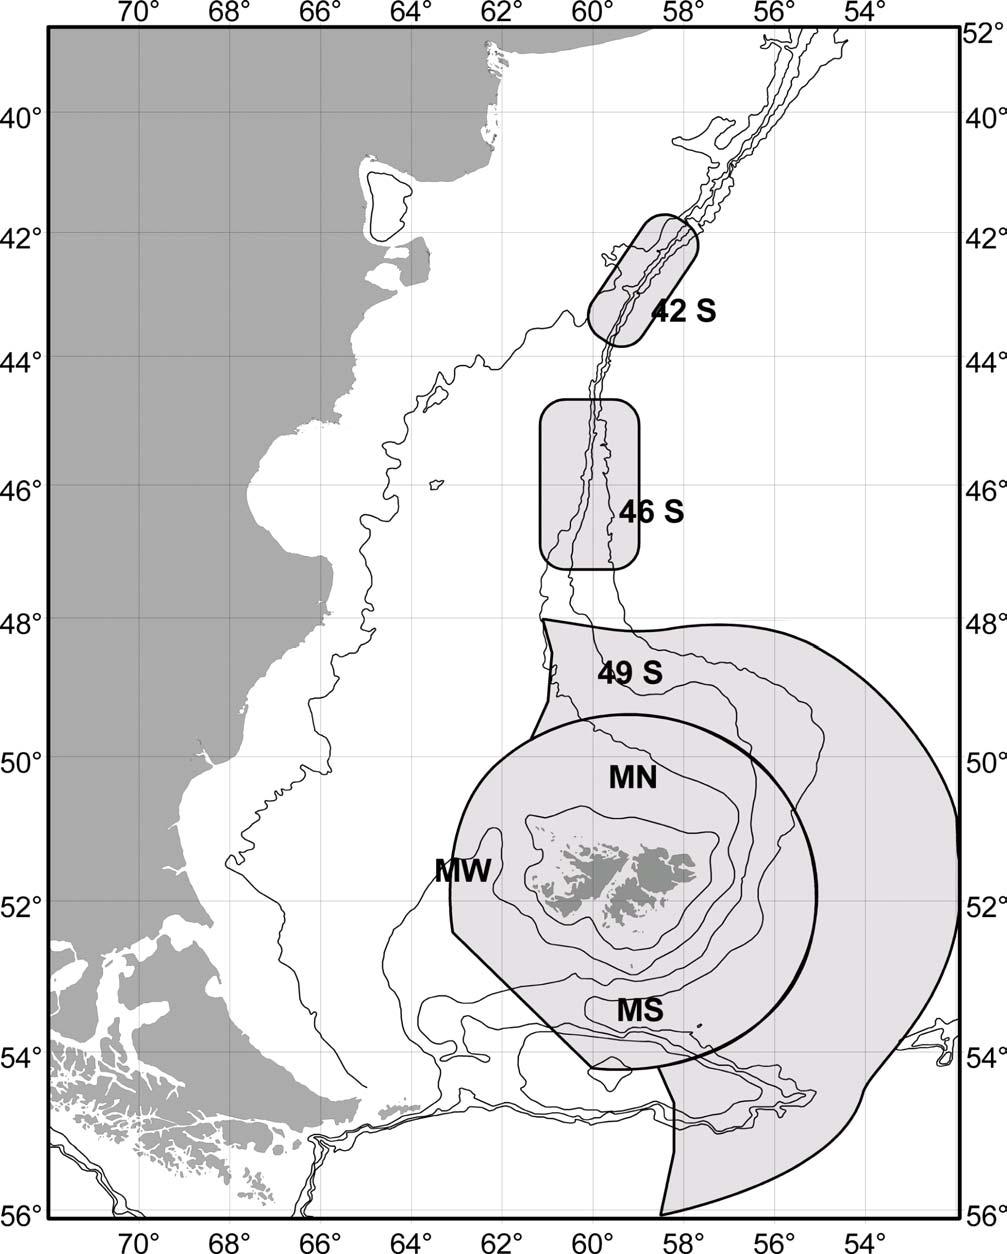 FOCZ FICZ Figure 1. - Main fishing areas in the Patagonian Shelf for the Spanish fishing fleet D.